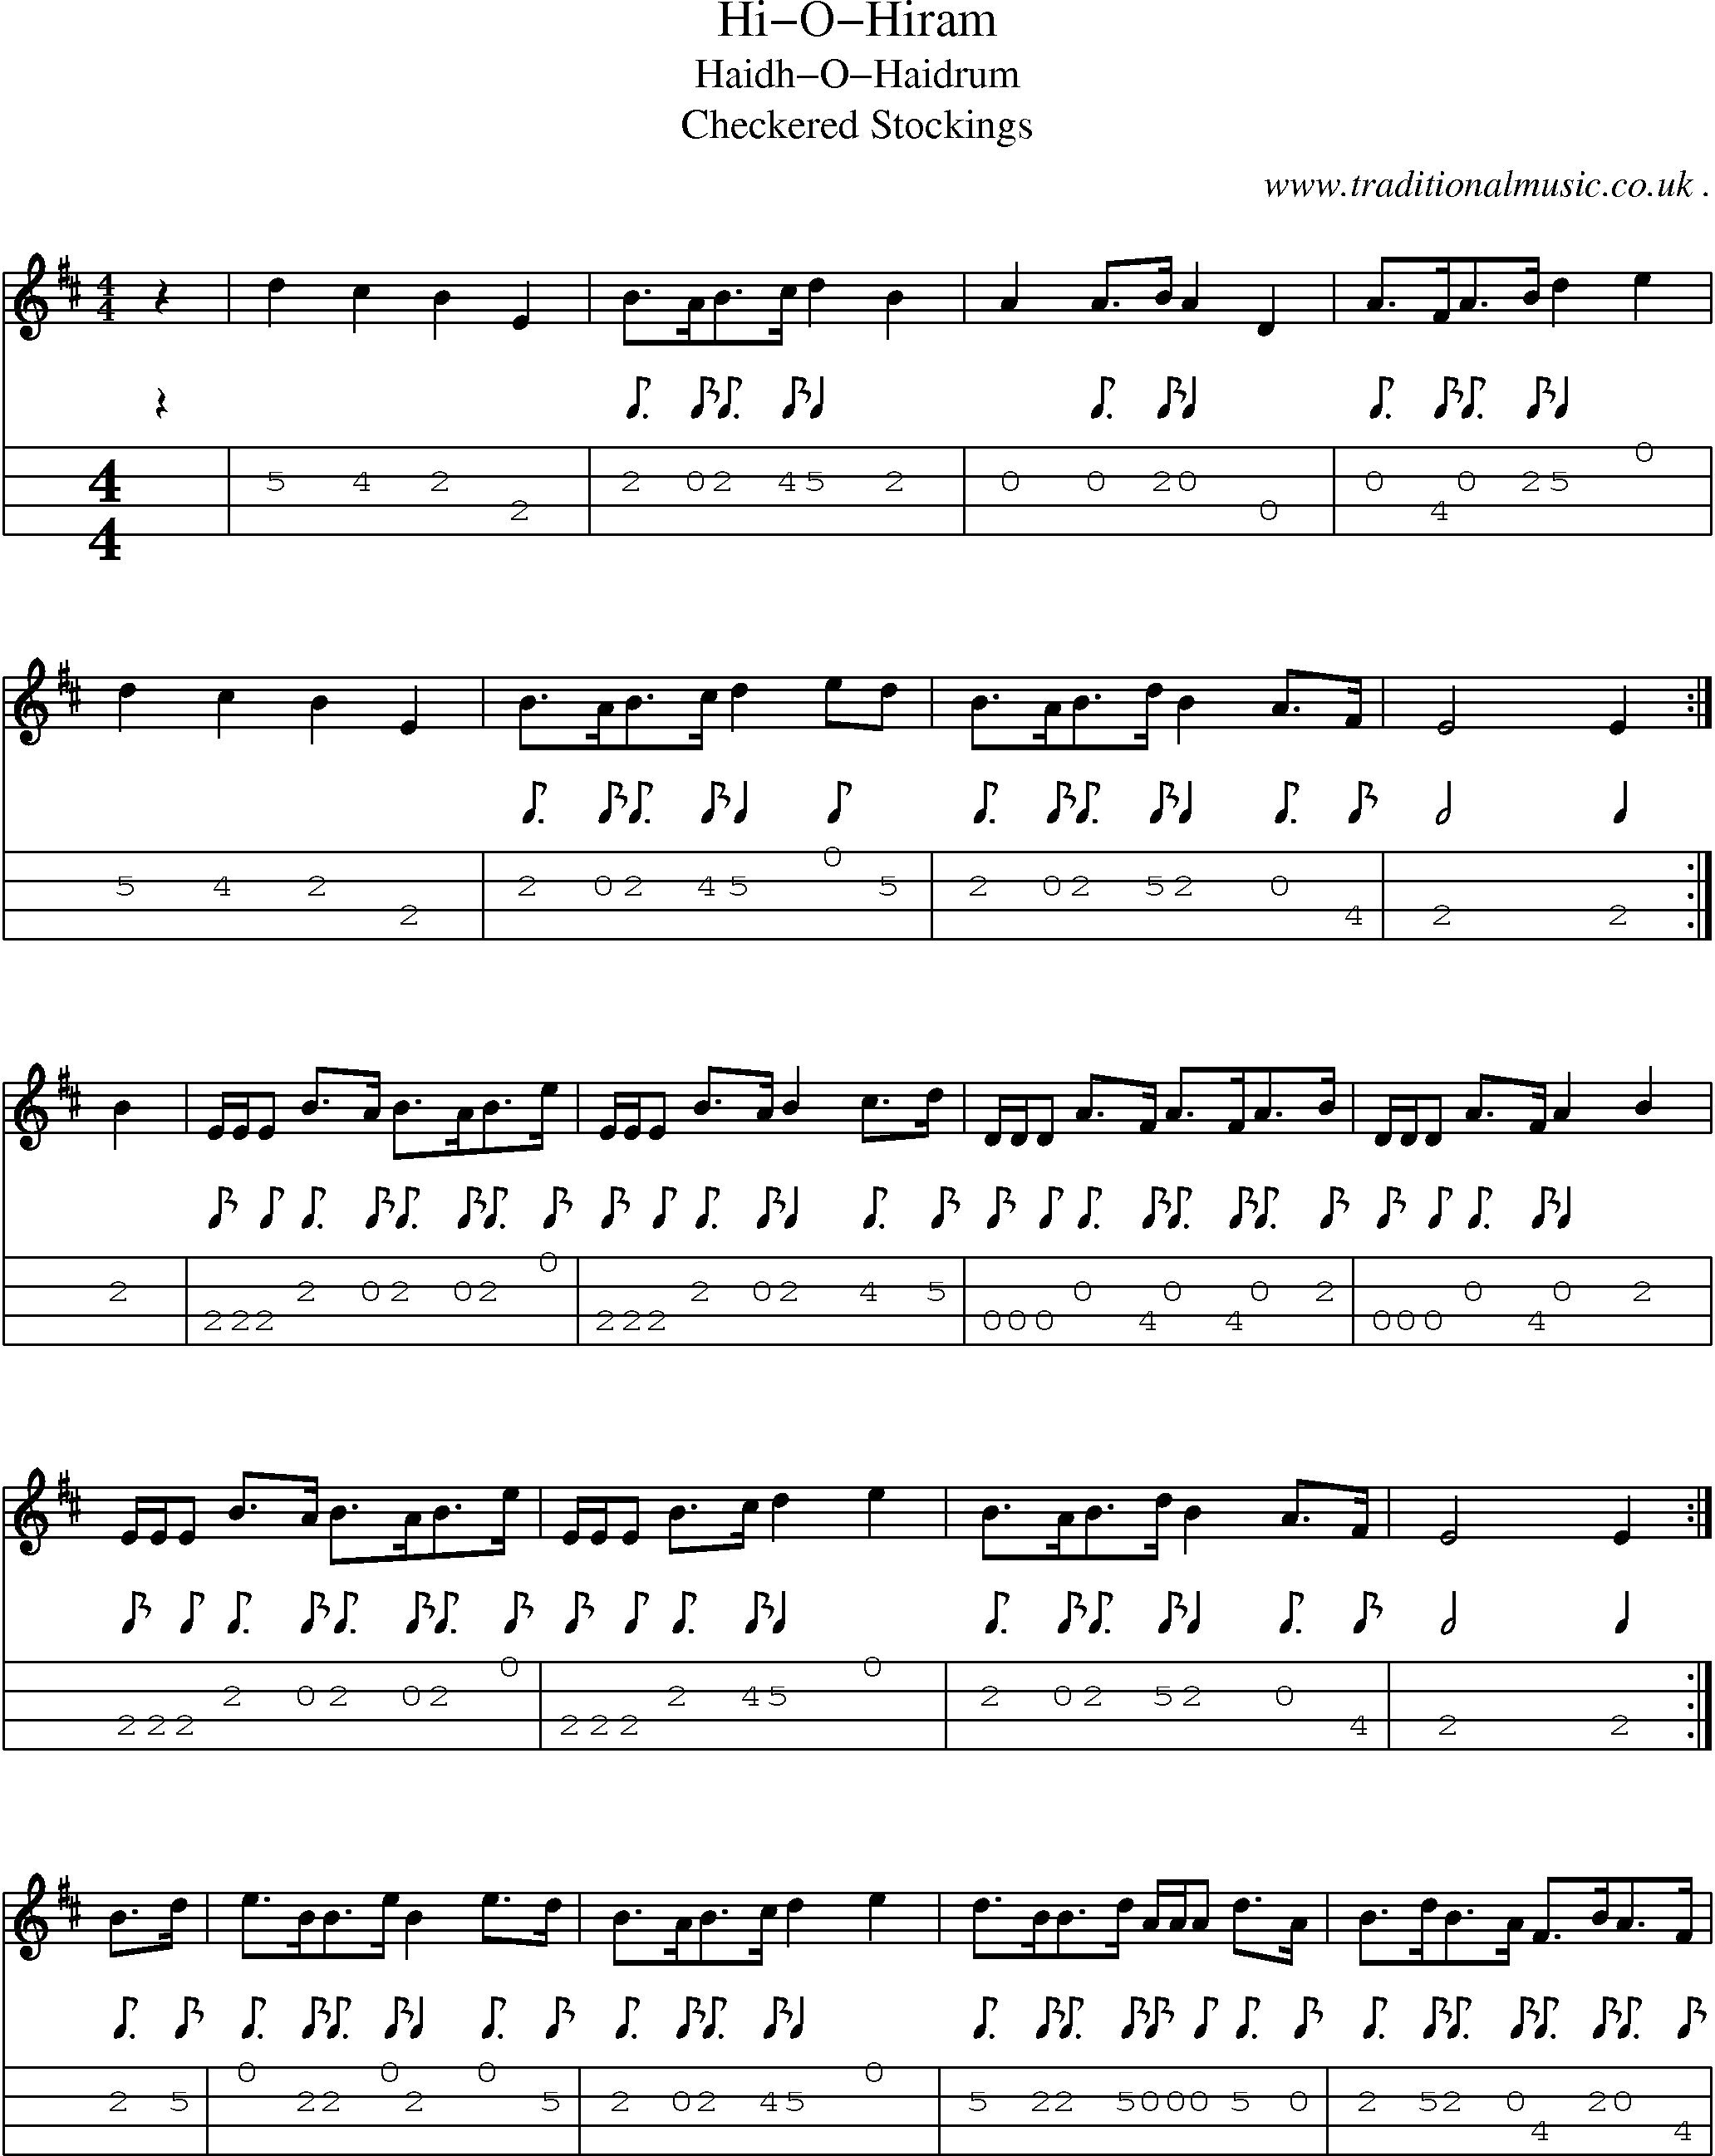 Sheet-music  score, Chords and Mandolin Tabs for Hi-o-hiram